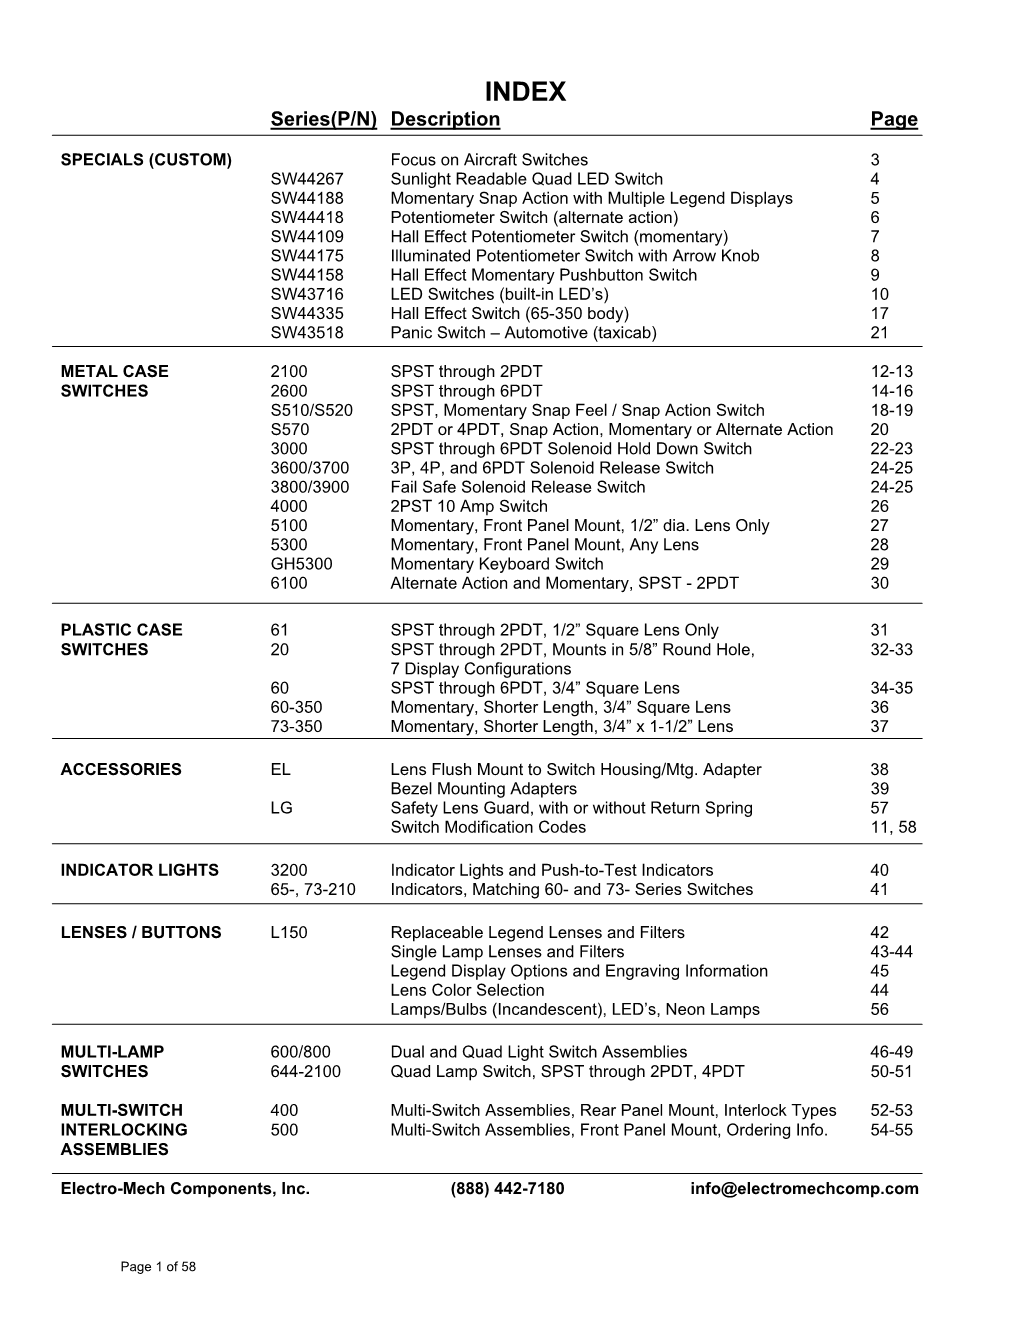 EMC Full Product Catalog